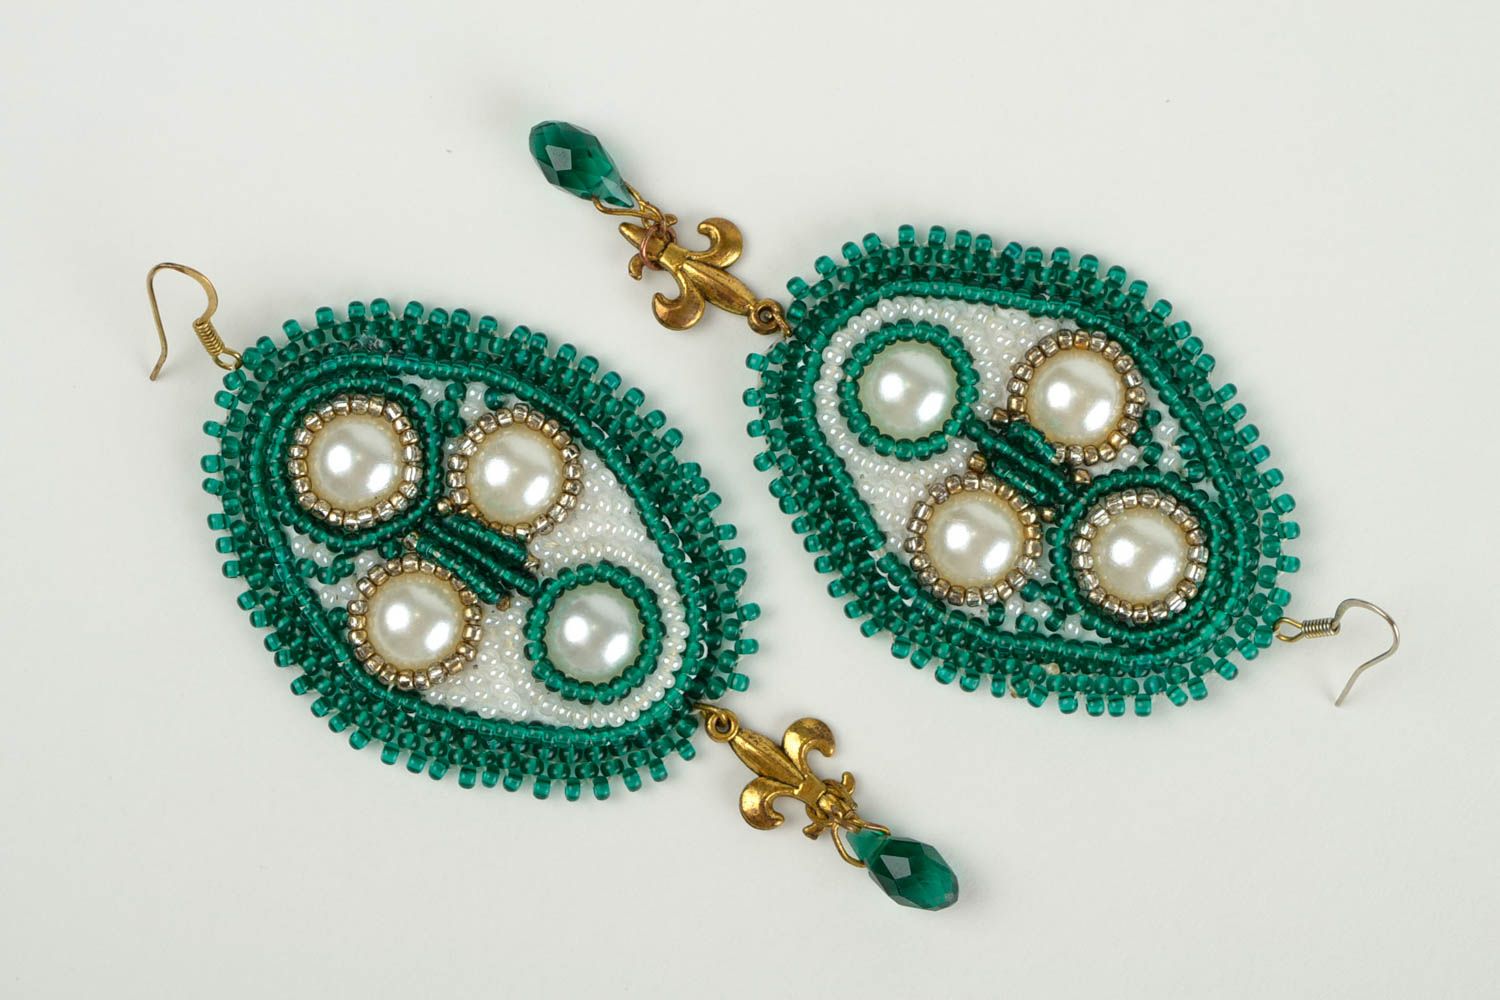 Beautiful handmade beaded earrings beautiful jewellery unusual gifts for her photo 2